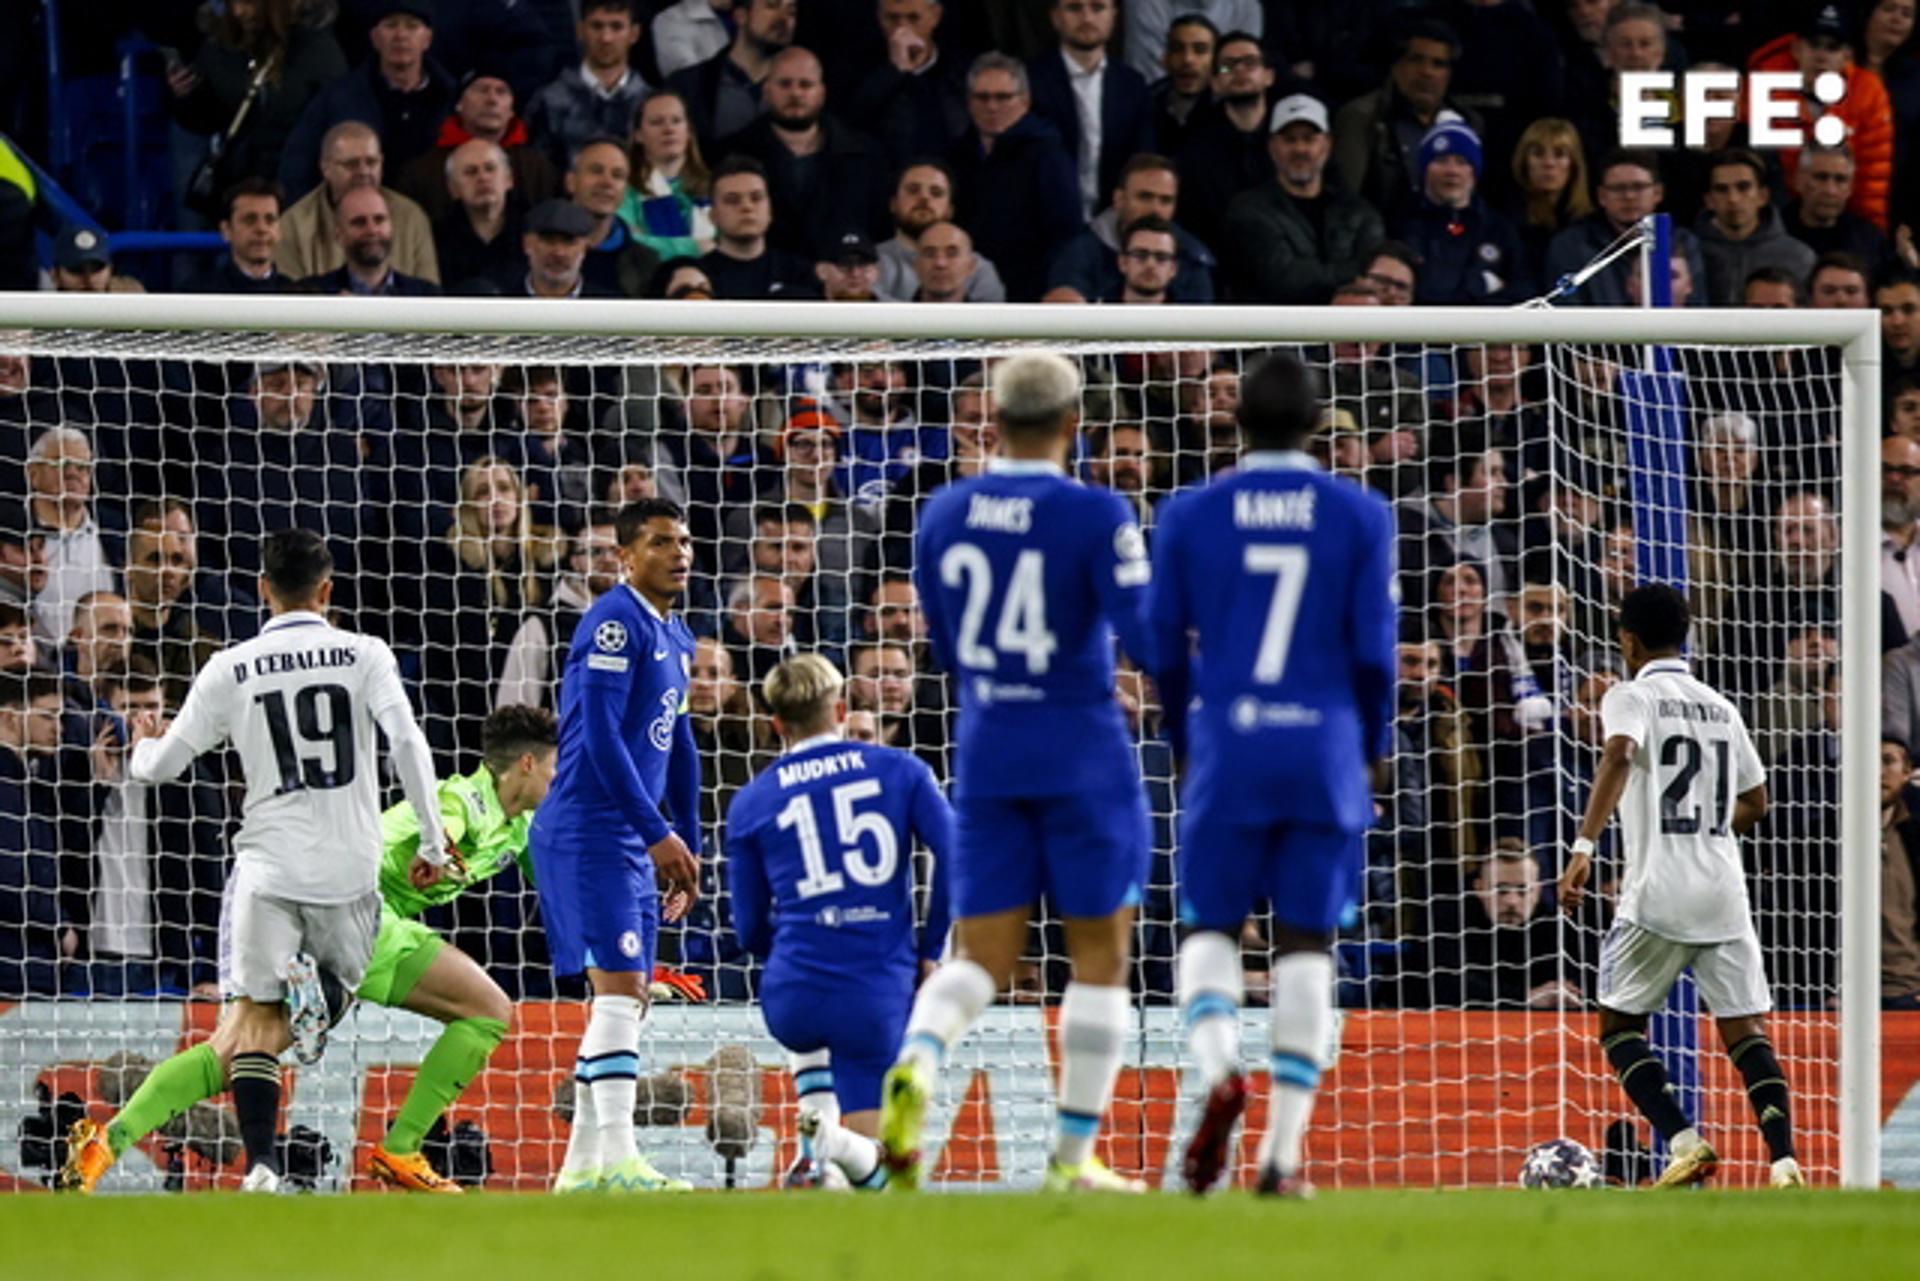 Real Madrid's Rodrygo (No. 21) scores against Chelsea during the UEFA Champions League quarterfinal 2nd leg in London on 18 April 2023. EFE/EPA/TOLGA AKMEN